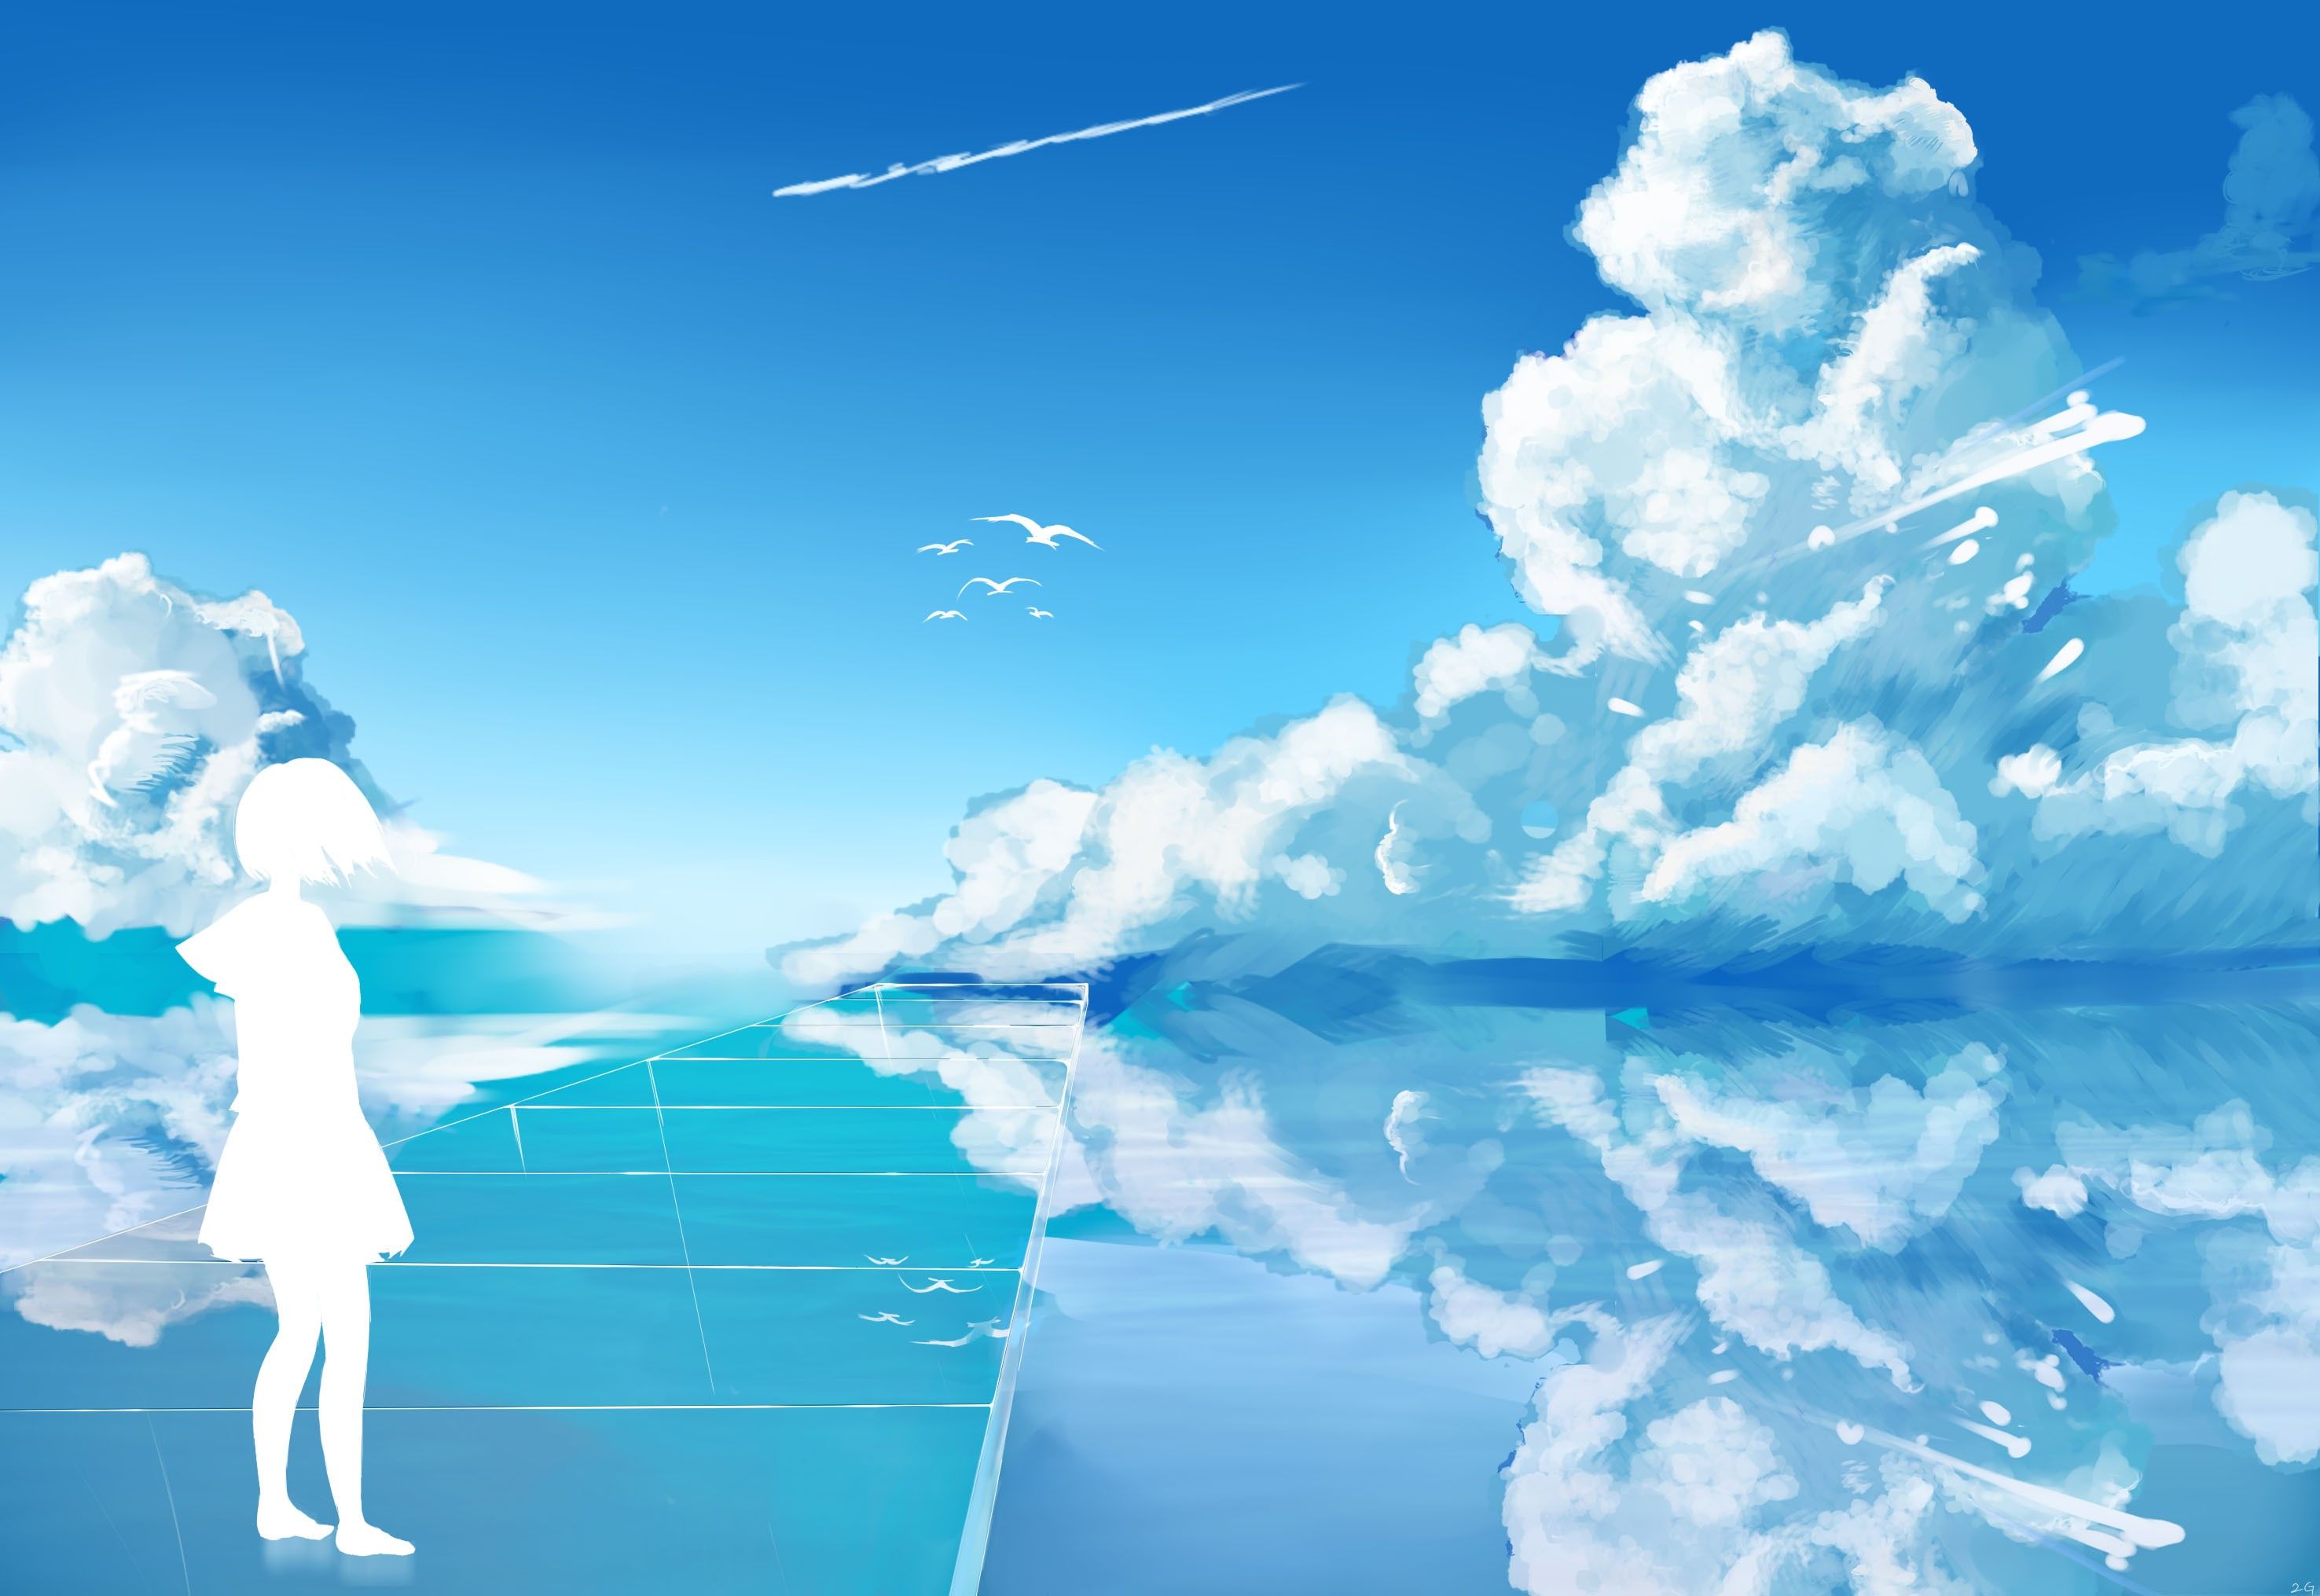 Dark Blue Sky Anime Scenery Wallpapers